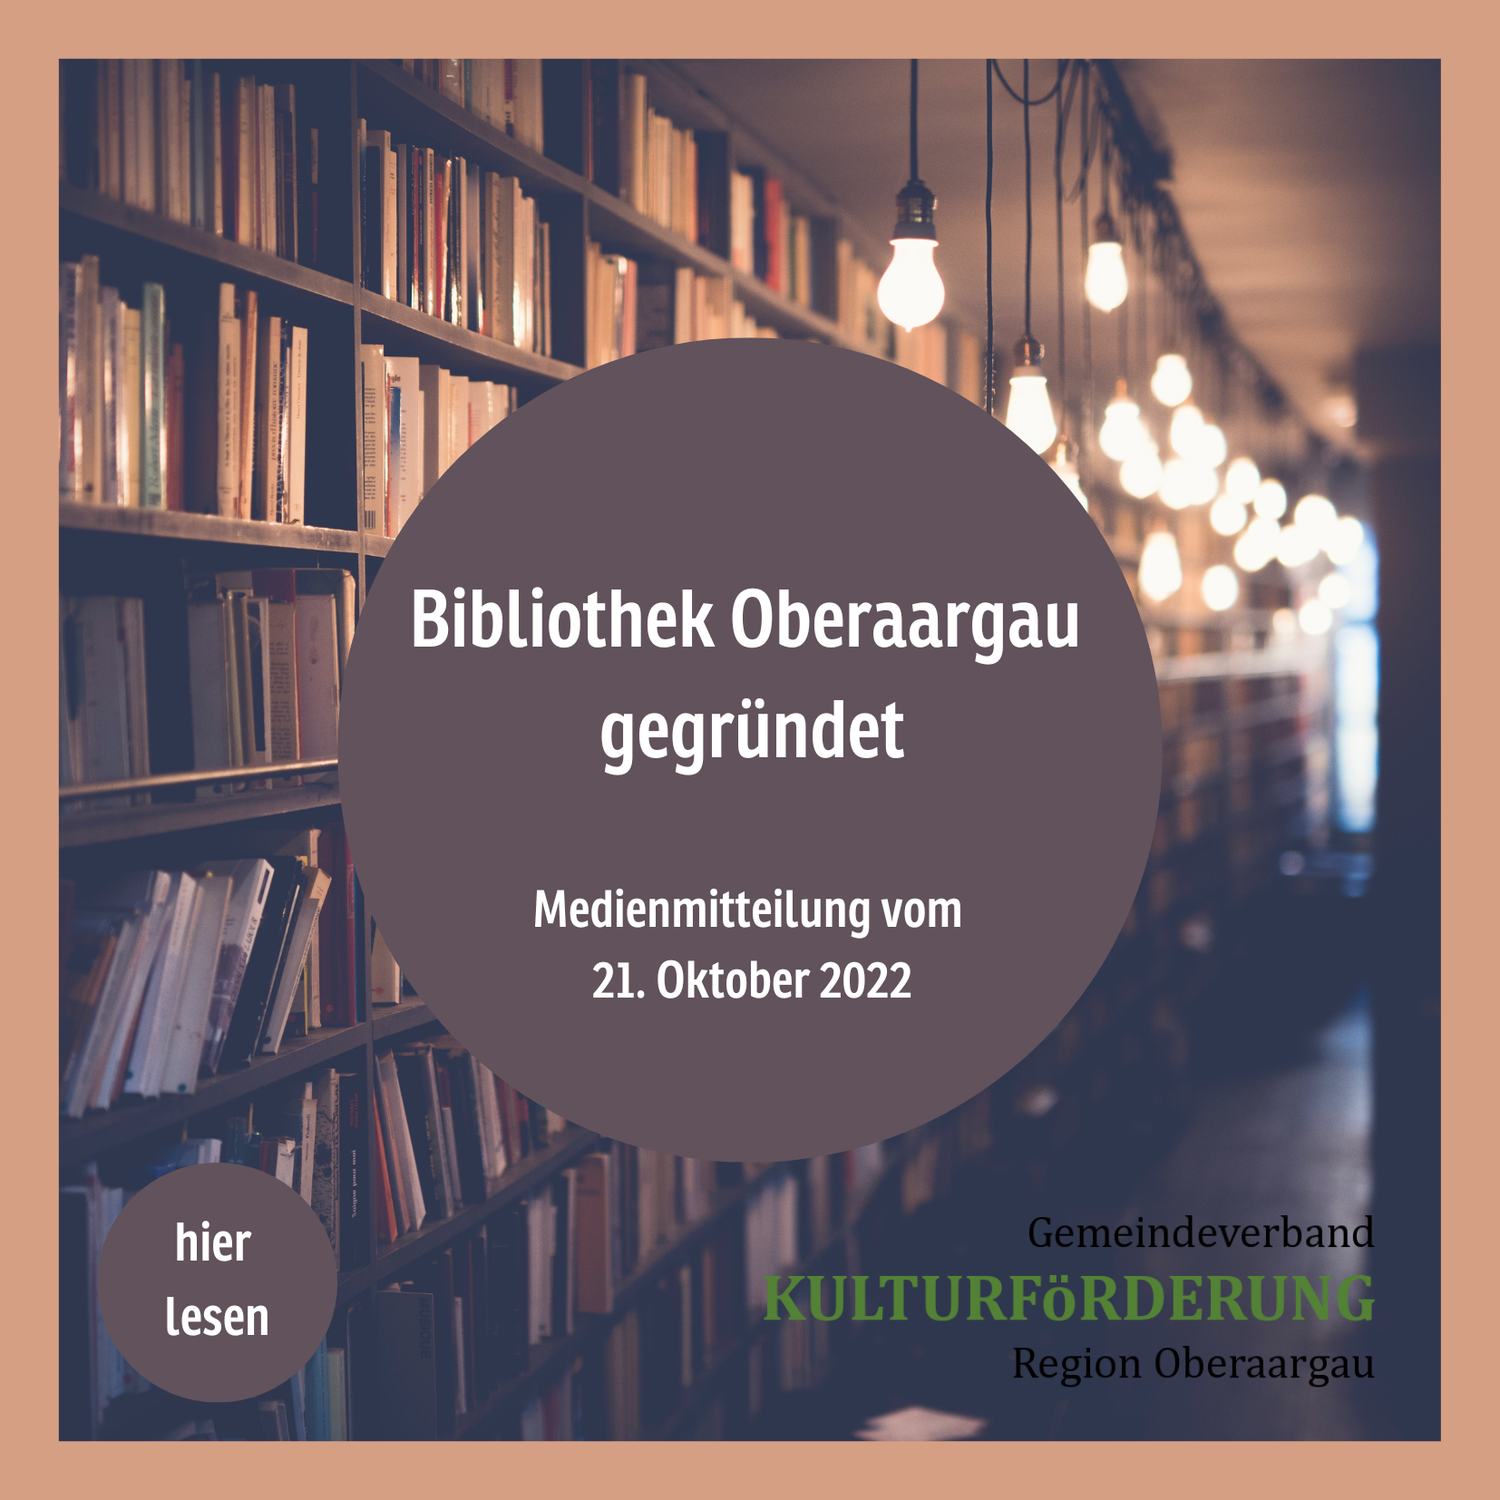 Bibliothek Oberaargau gegründet!